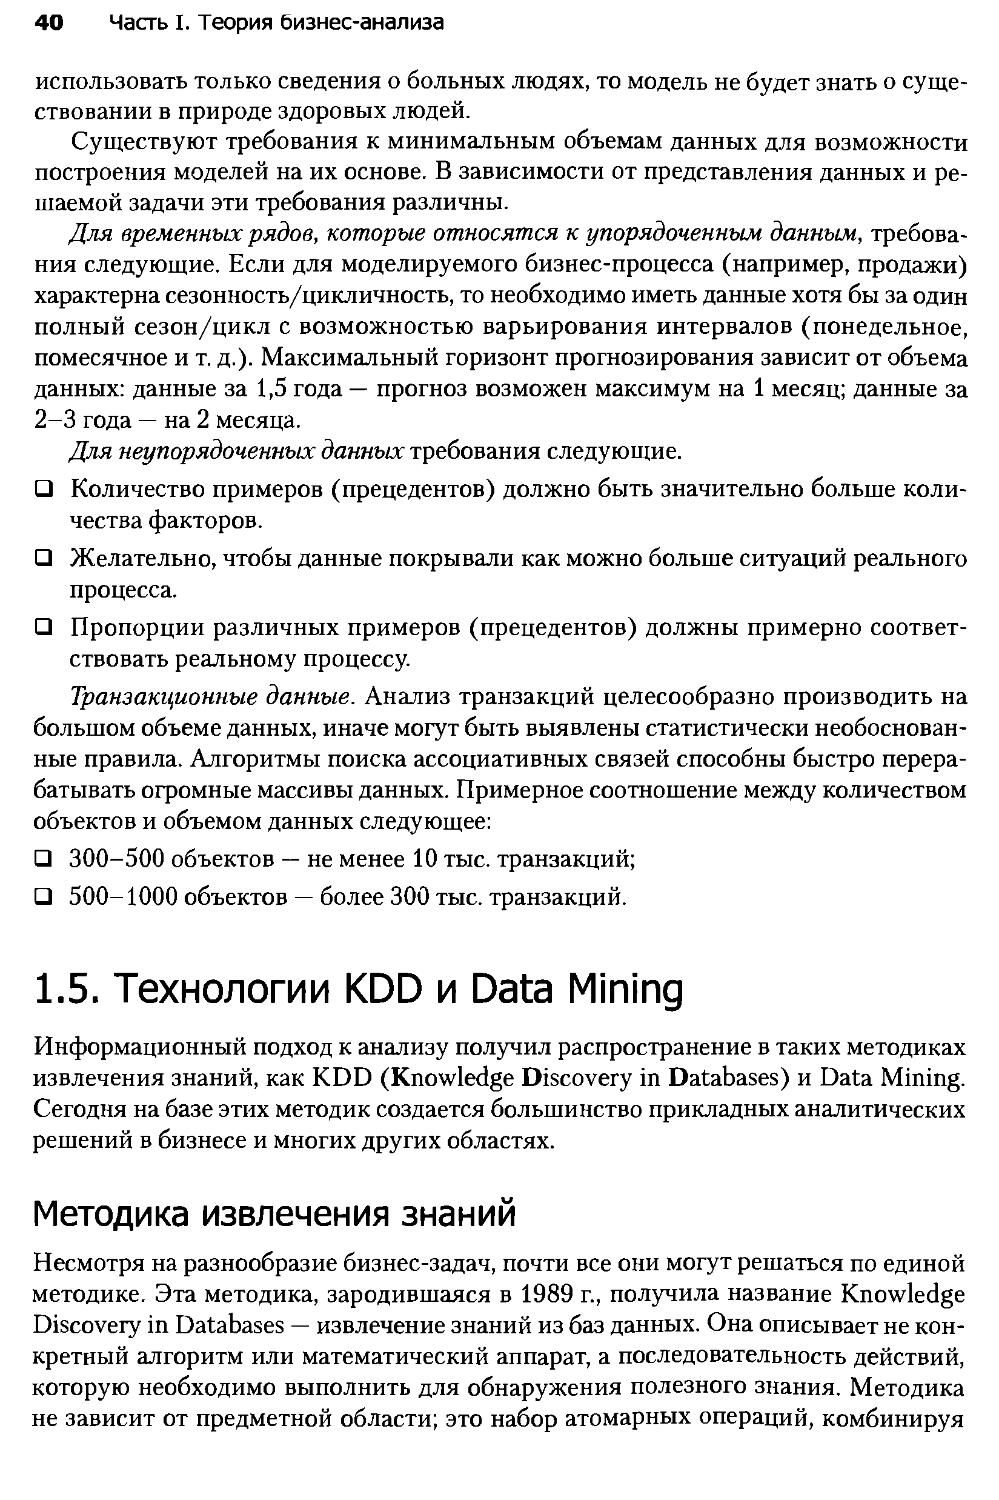 1.5.Технологии KDD и Data Mining